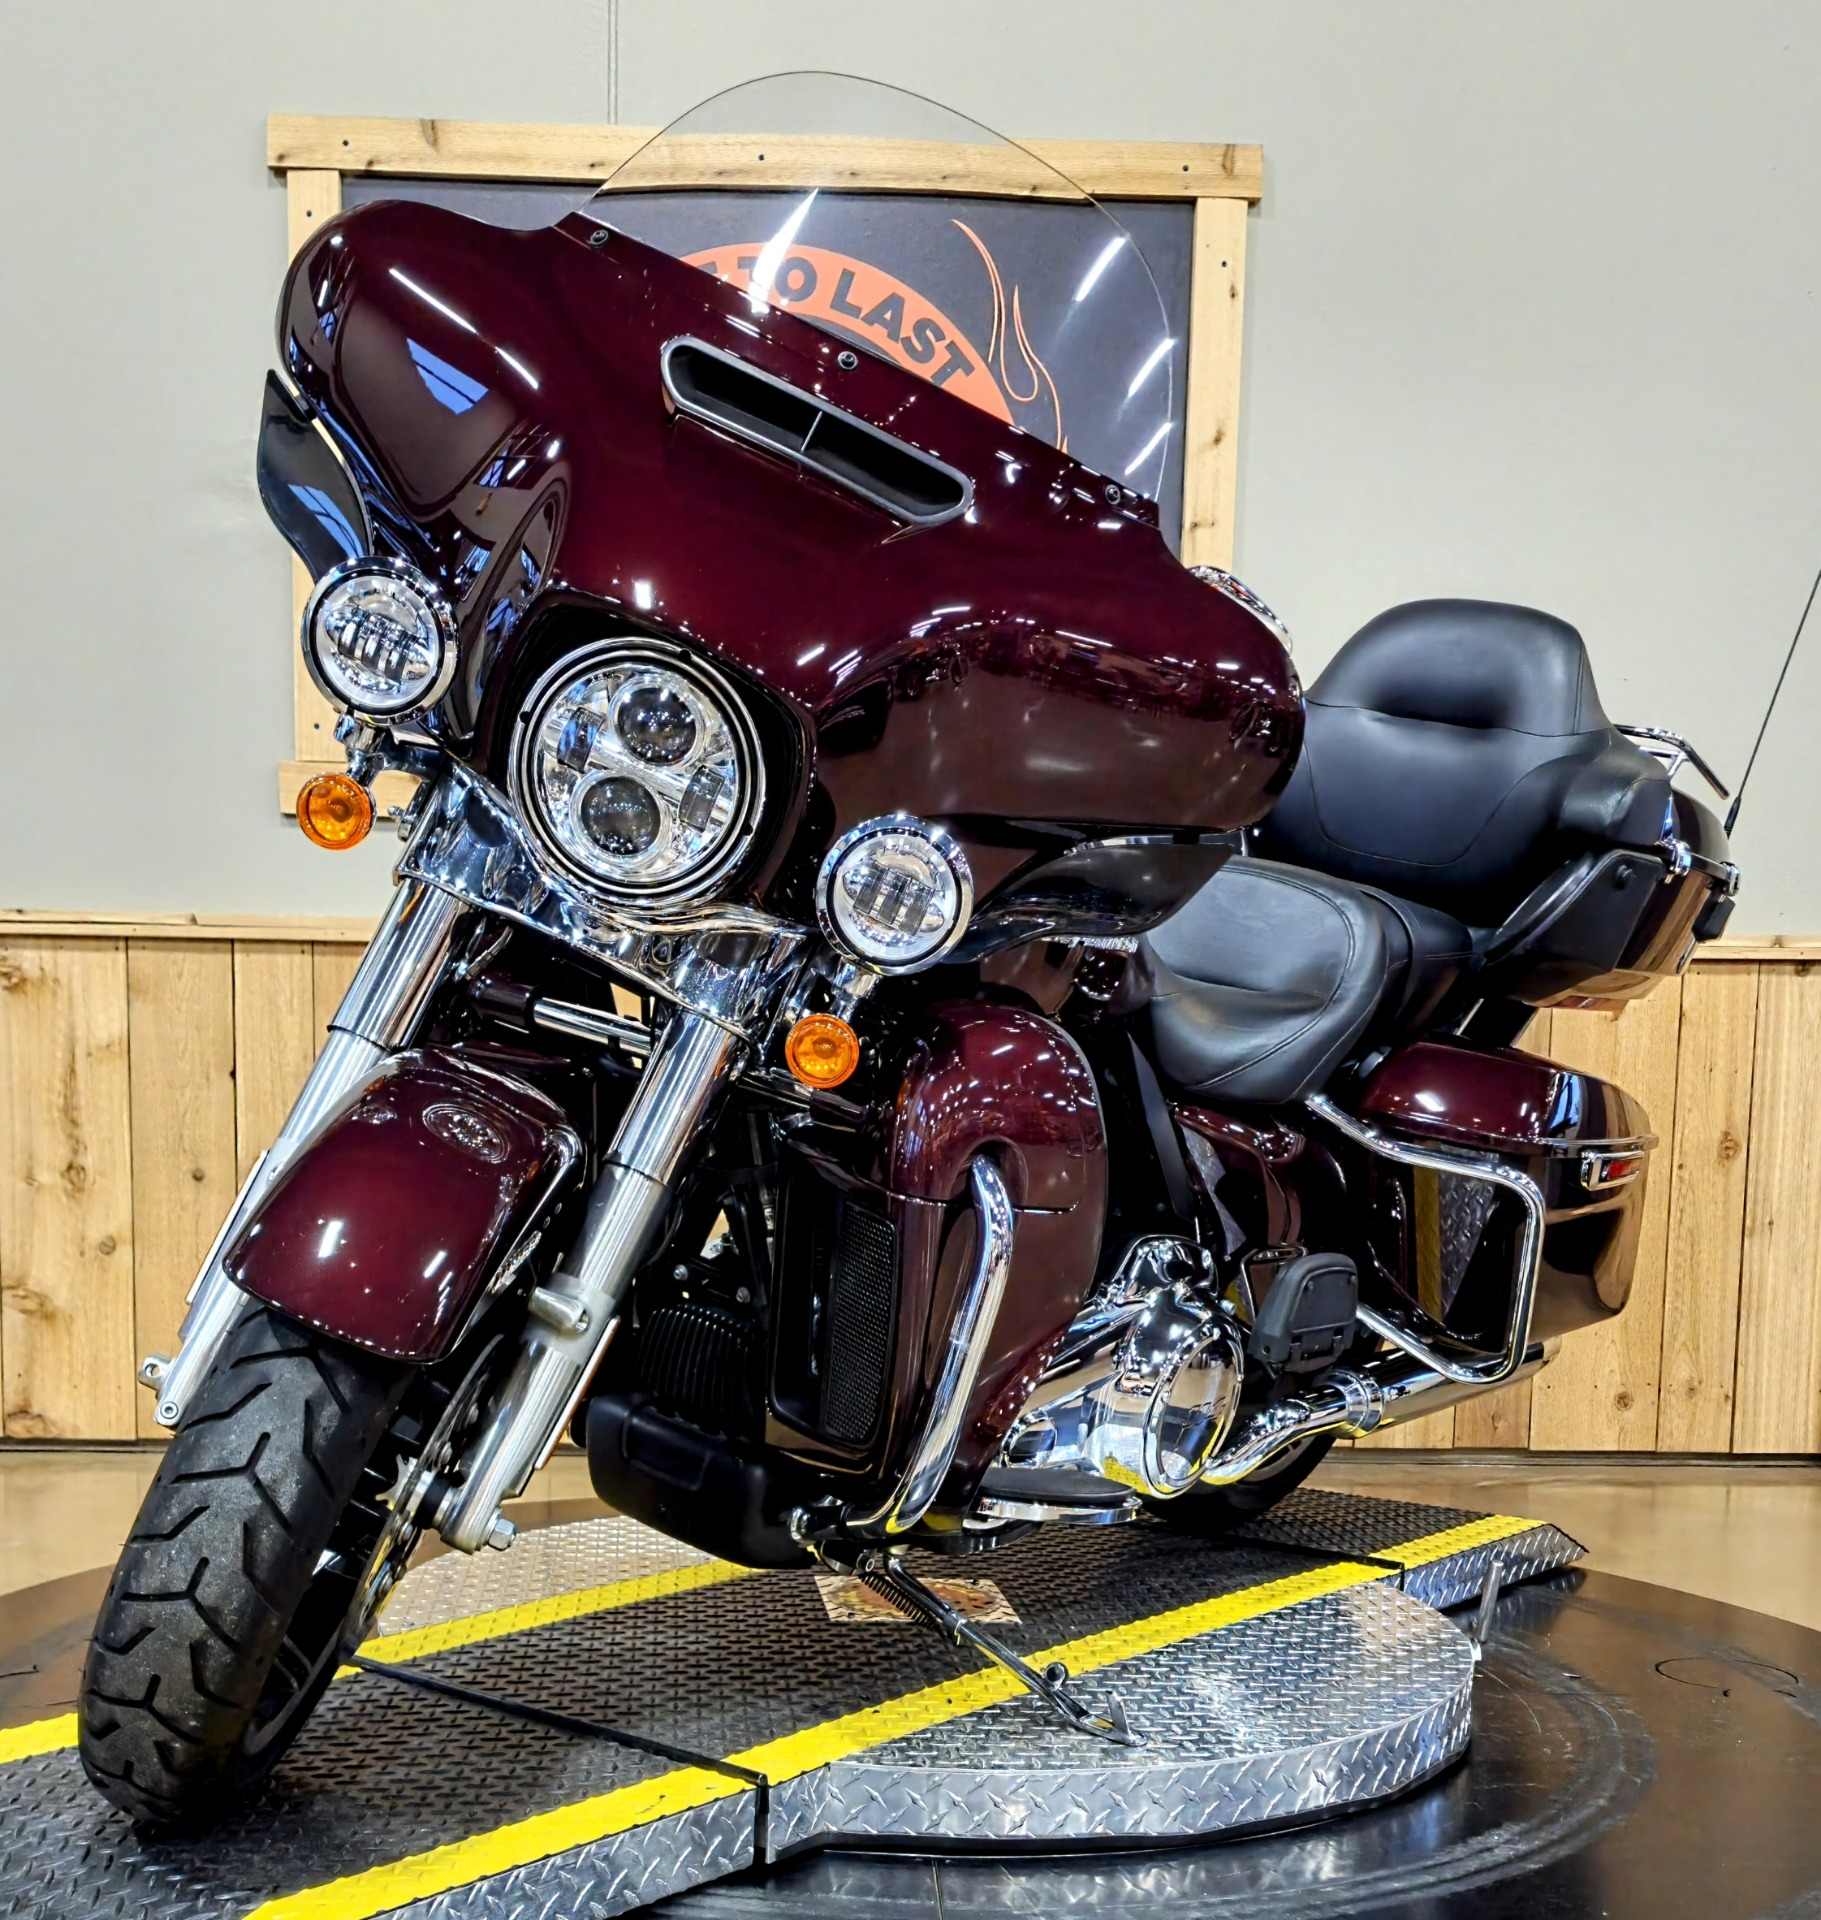 2021 Harley-Davidson Ultra Limited in Faribault, Minnesota - Photo 4